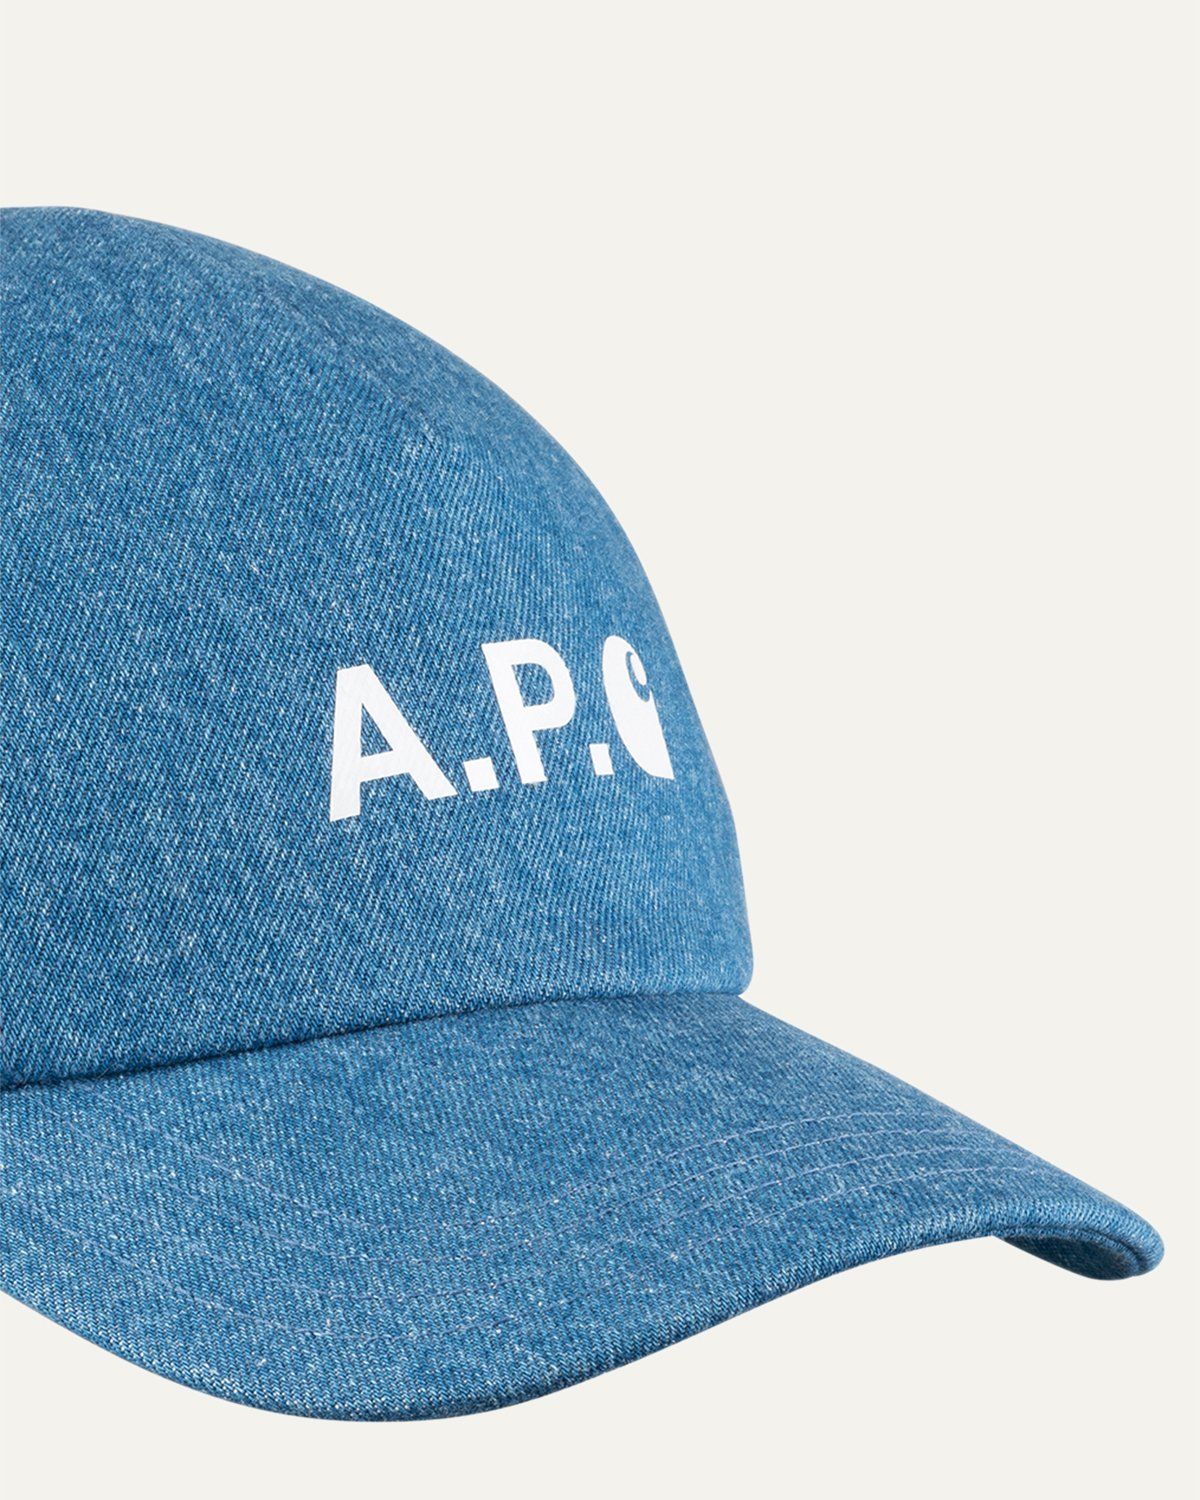 A.P.C. x Carhartt WIP – Cameron Baseball Cap Indigo - Caps - Blue - Image 4